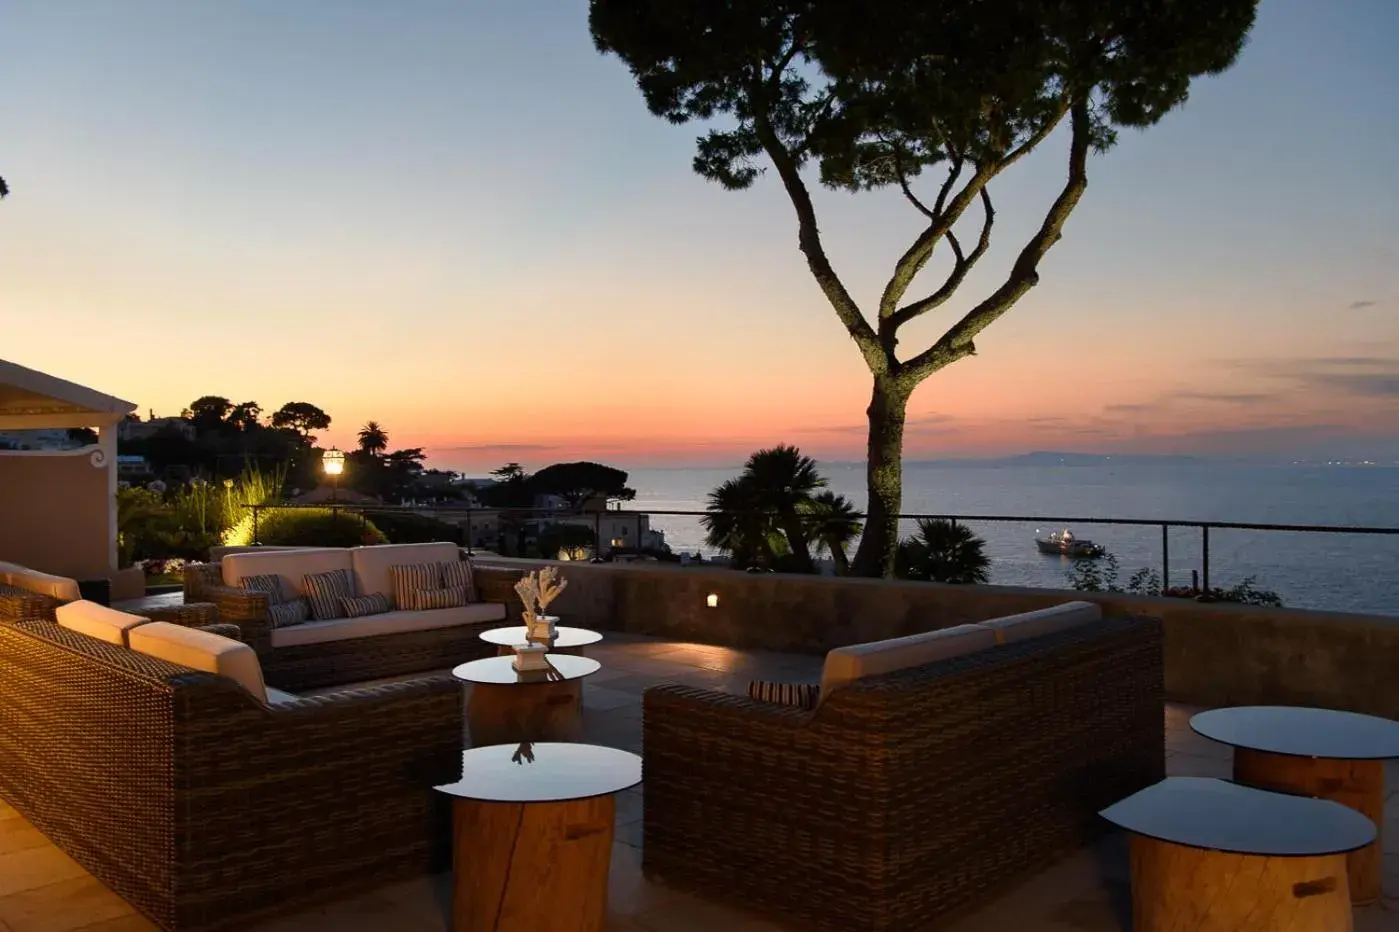 Sunrise/Sunset in Villa Marina Capri Hotel & Spa